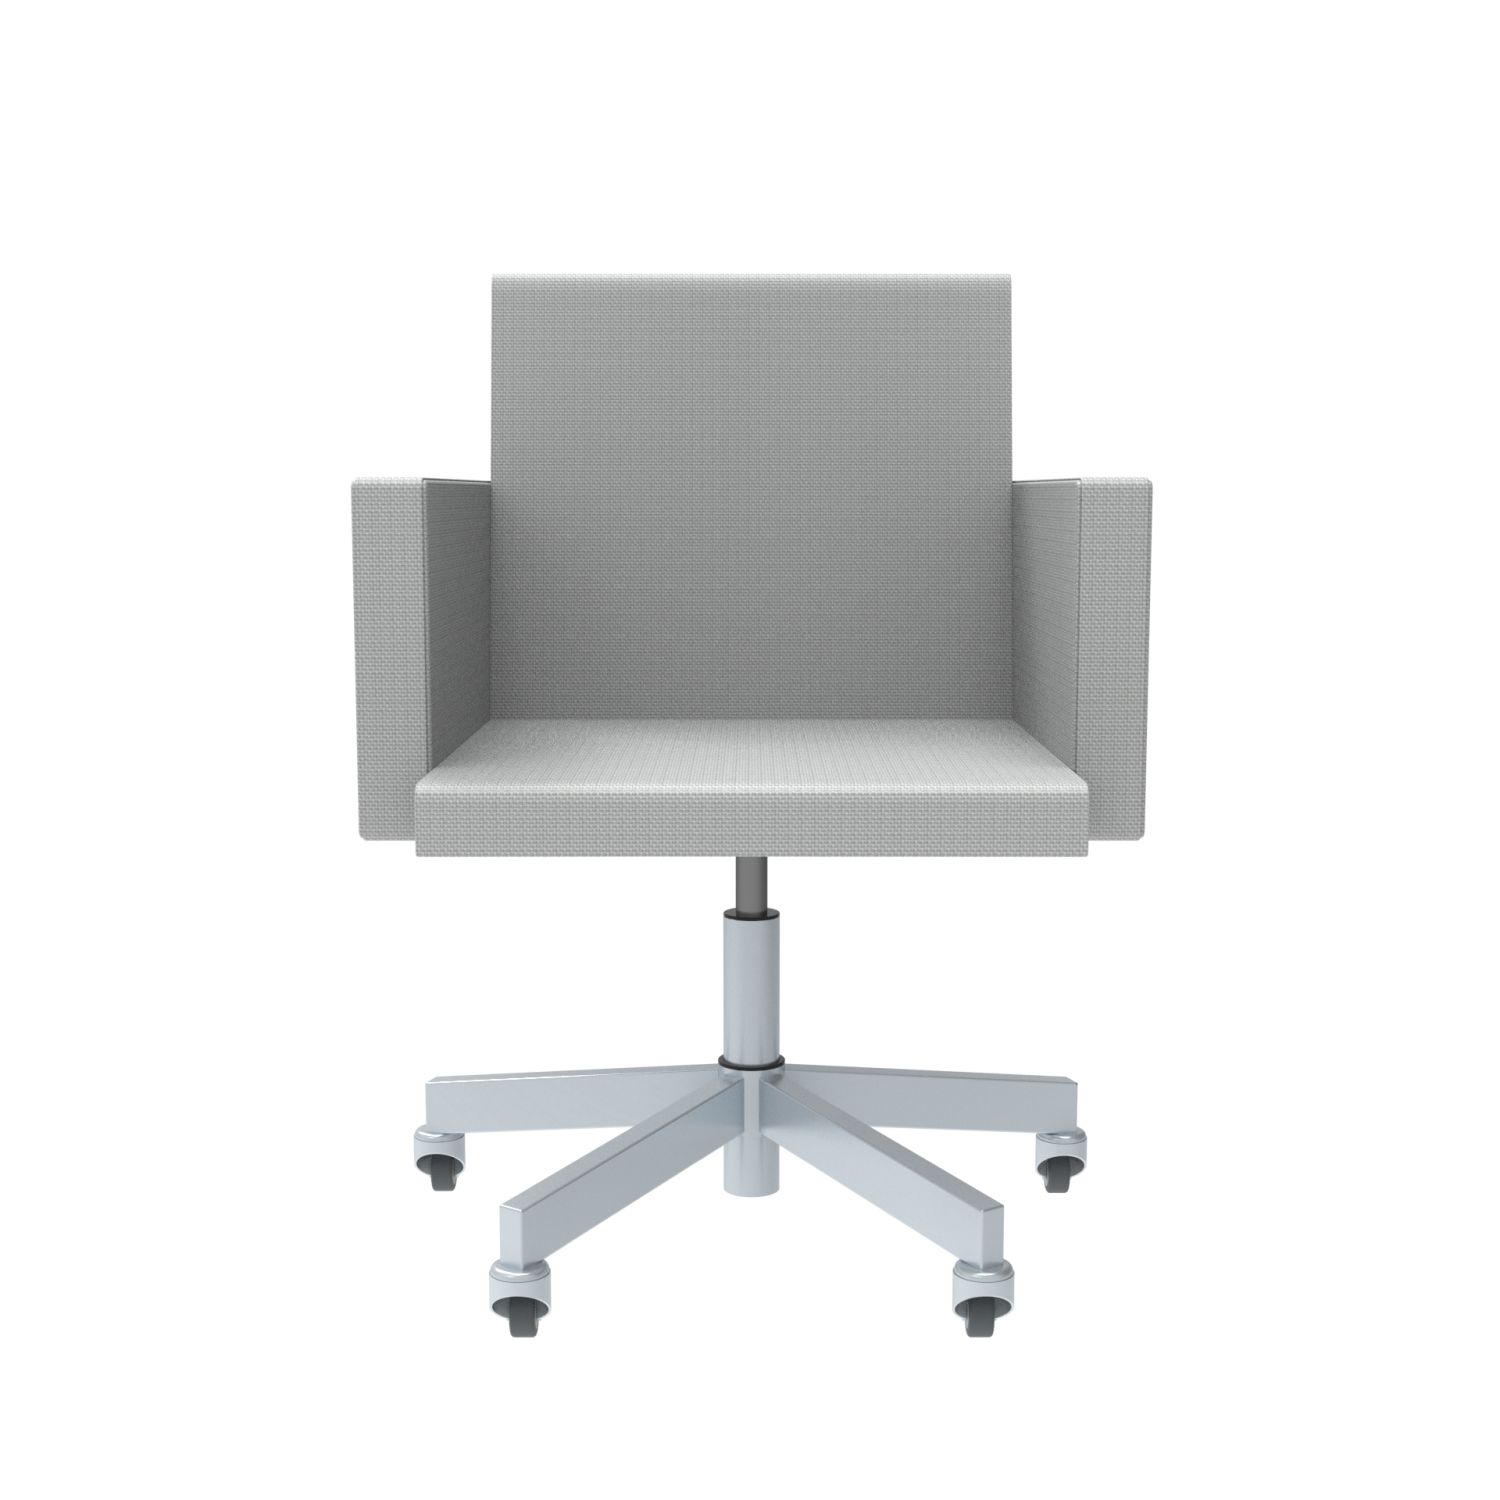 lensvelt atelier van lieshout office chair with armrests breeze light grey 171 galvanized soft rolls